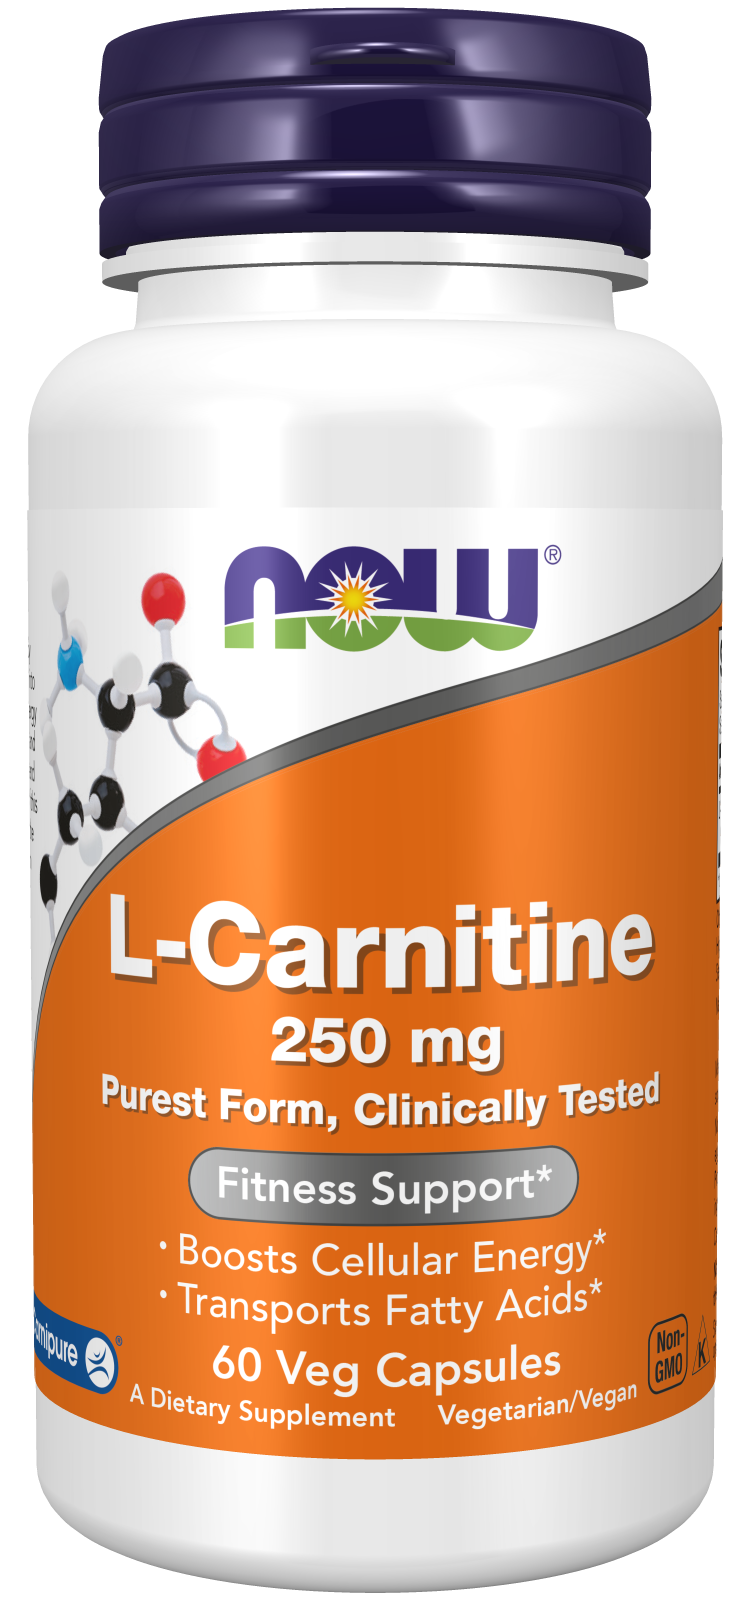 L-Carnitine 250 mg - 60 Veg Capsules Bottle Front